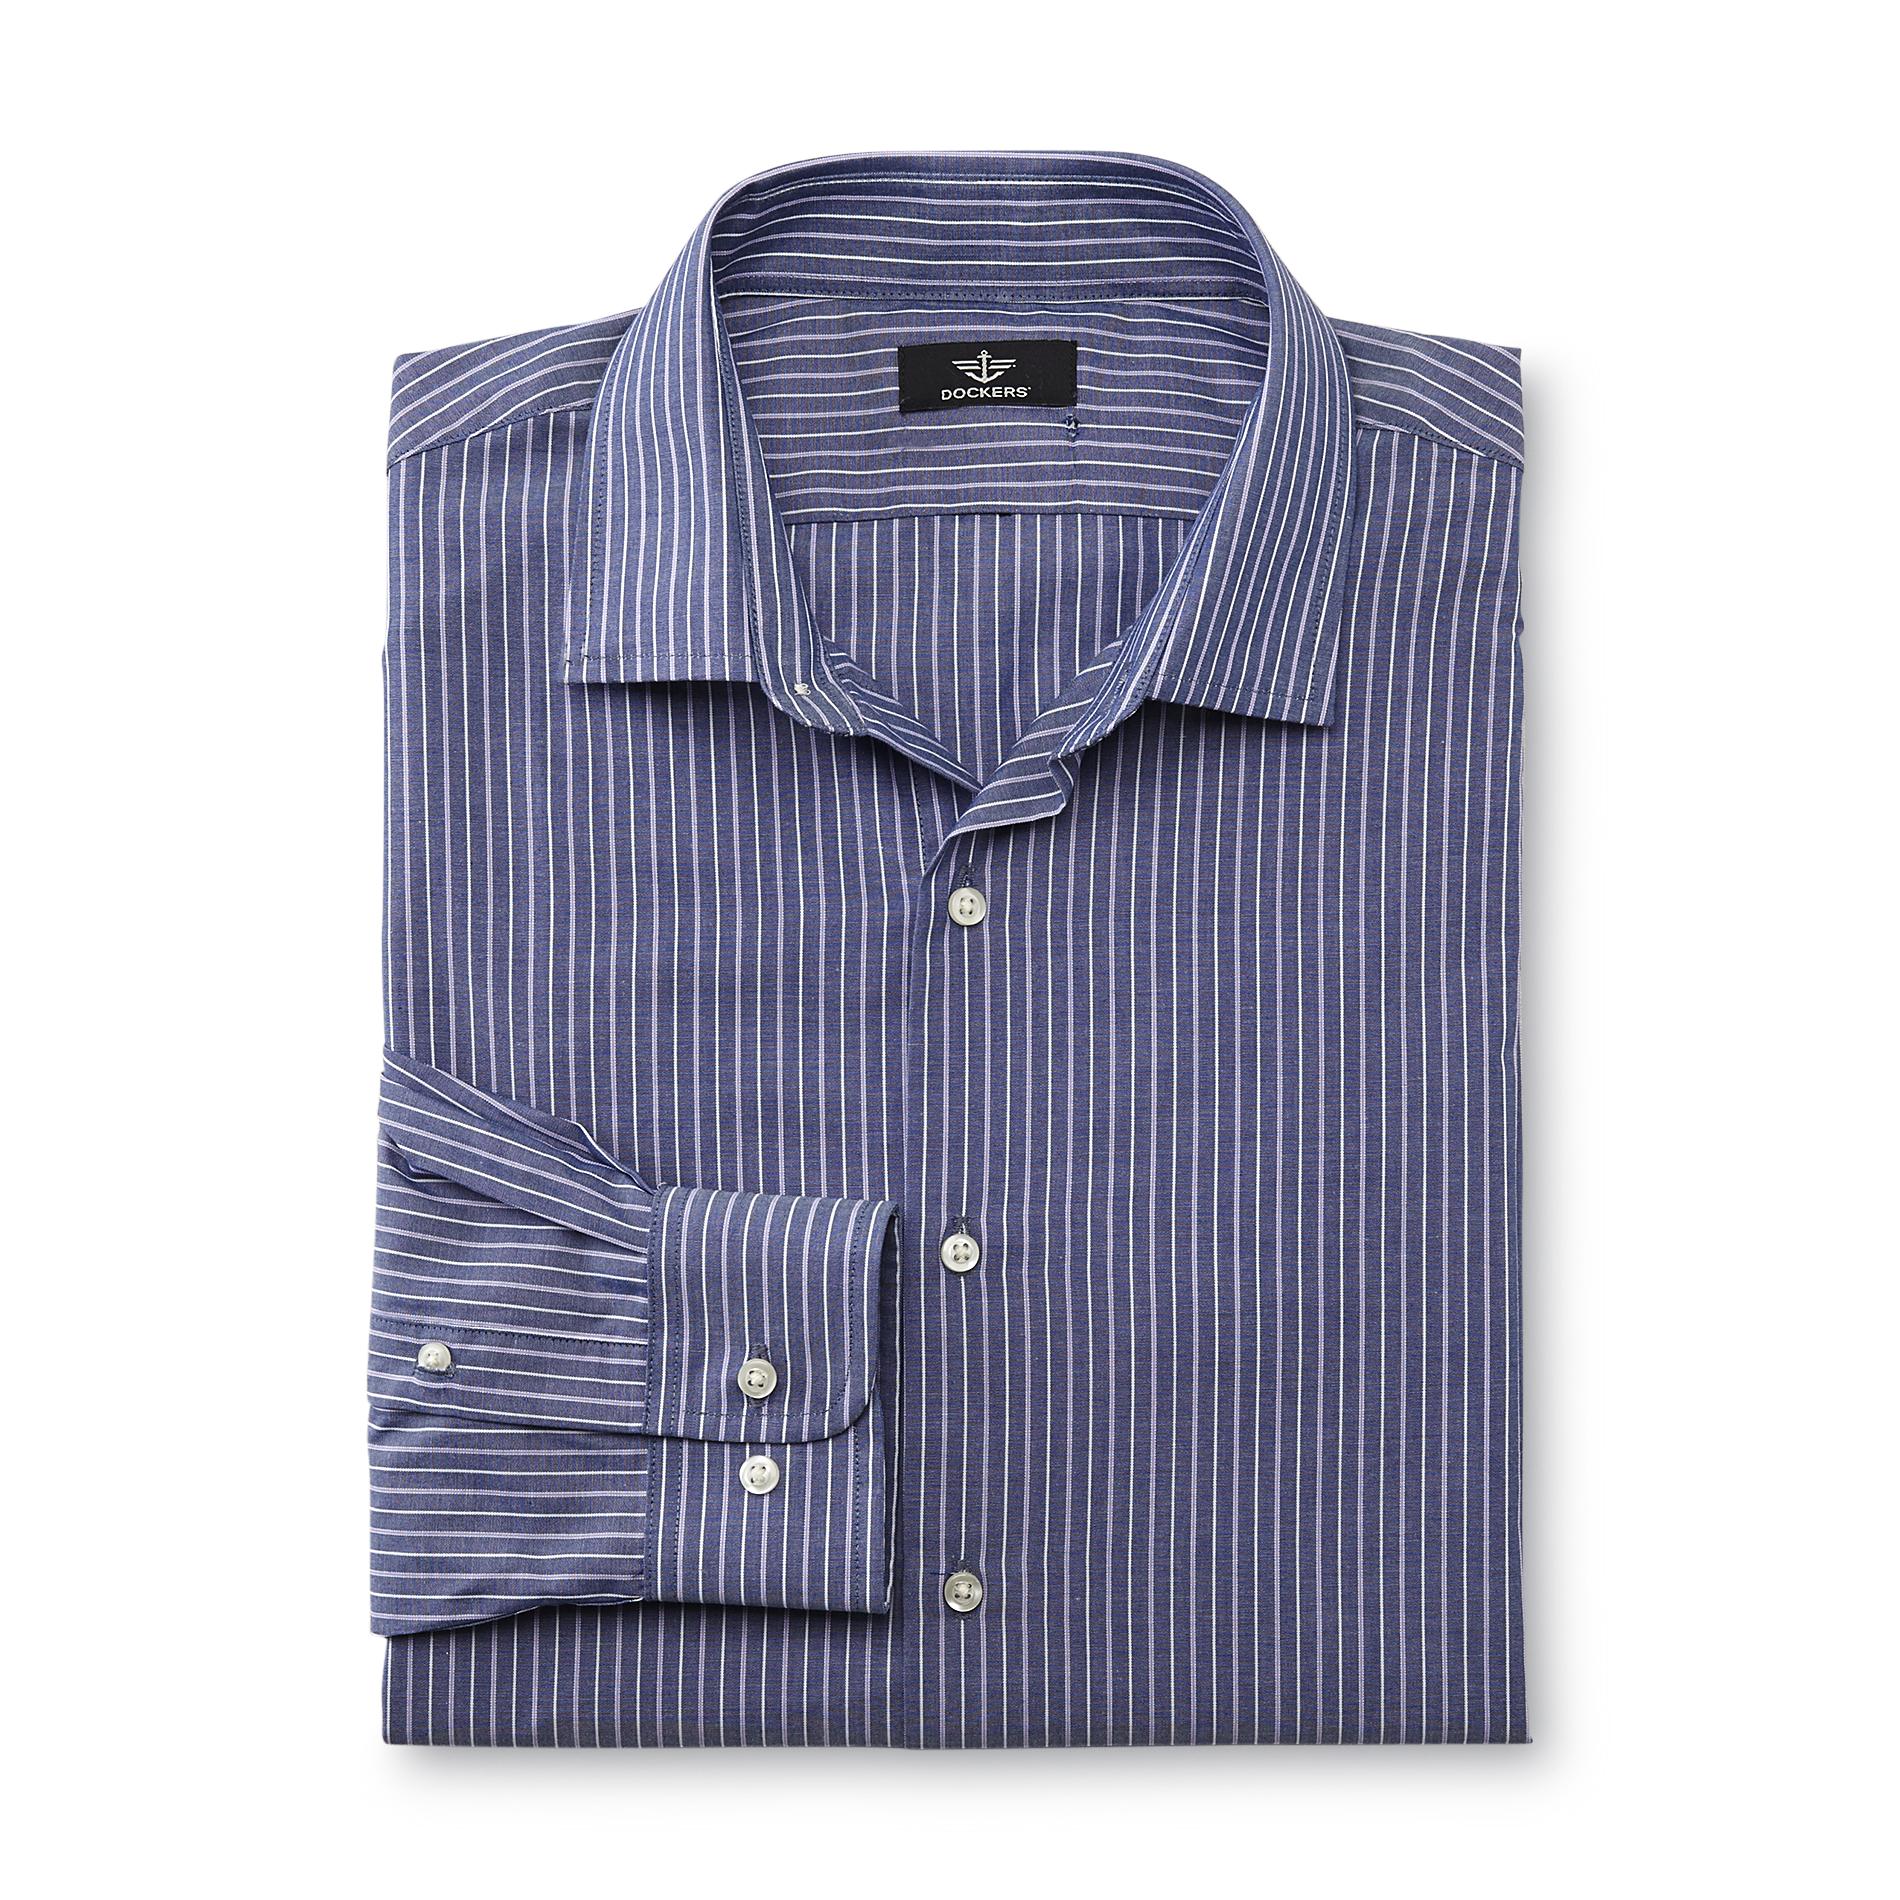 Dockers Men's Button-Front Dress Shirt - Striped